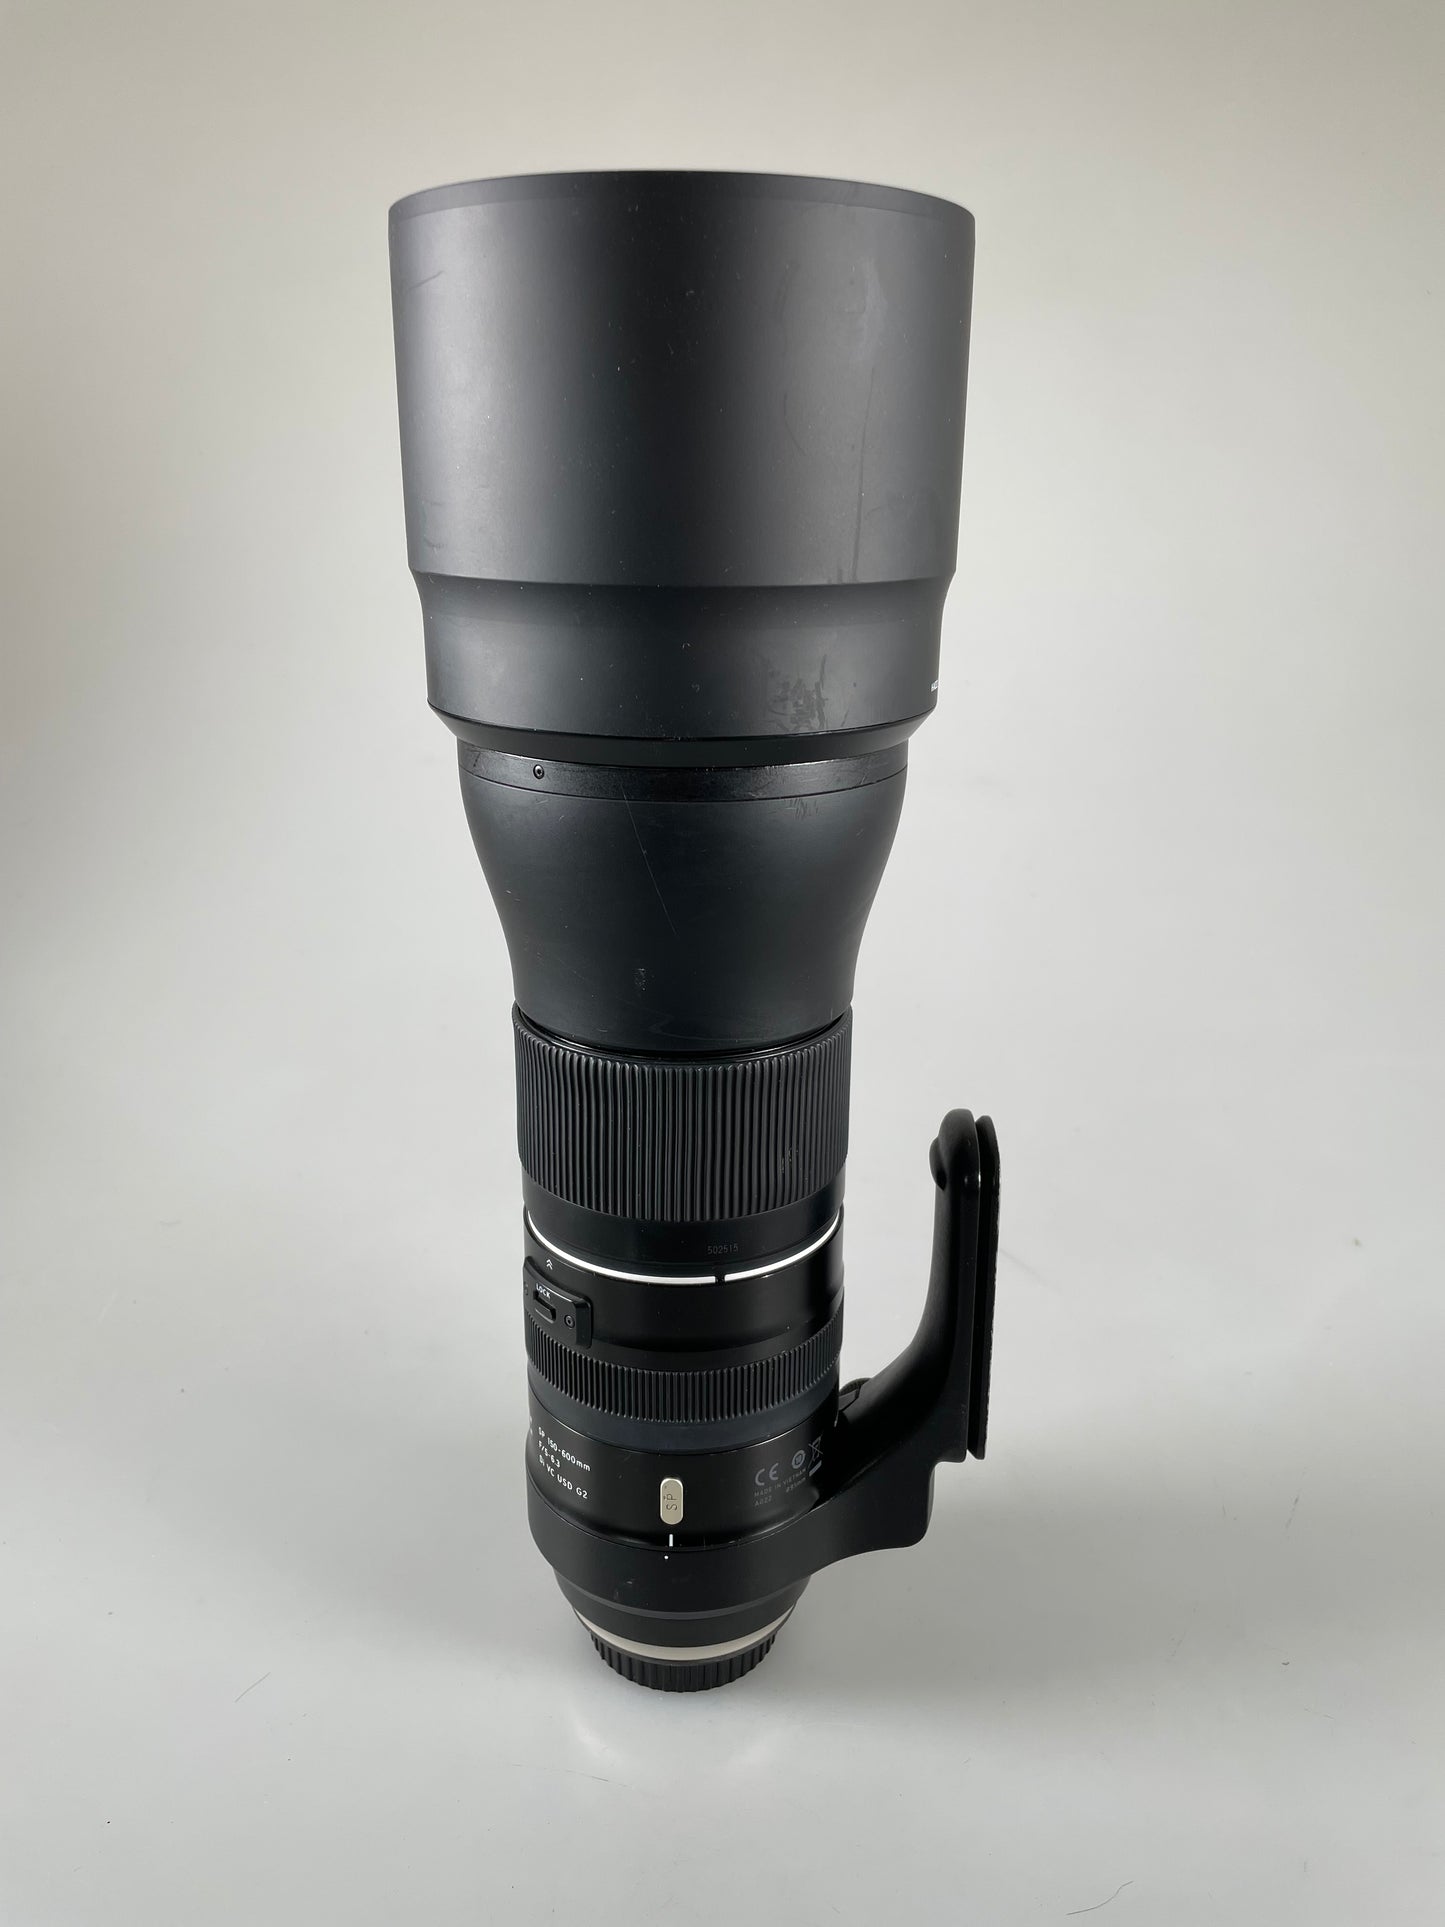 Tamron SP 150-600mm F5-6.3 Di VC USD G2 Lens for Nikon